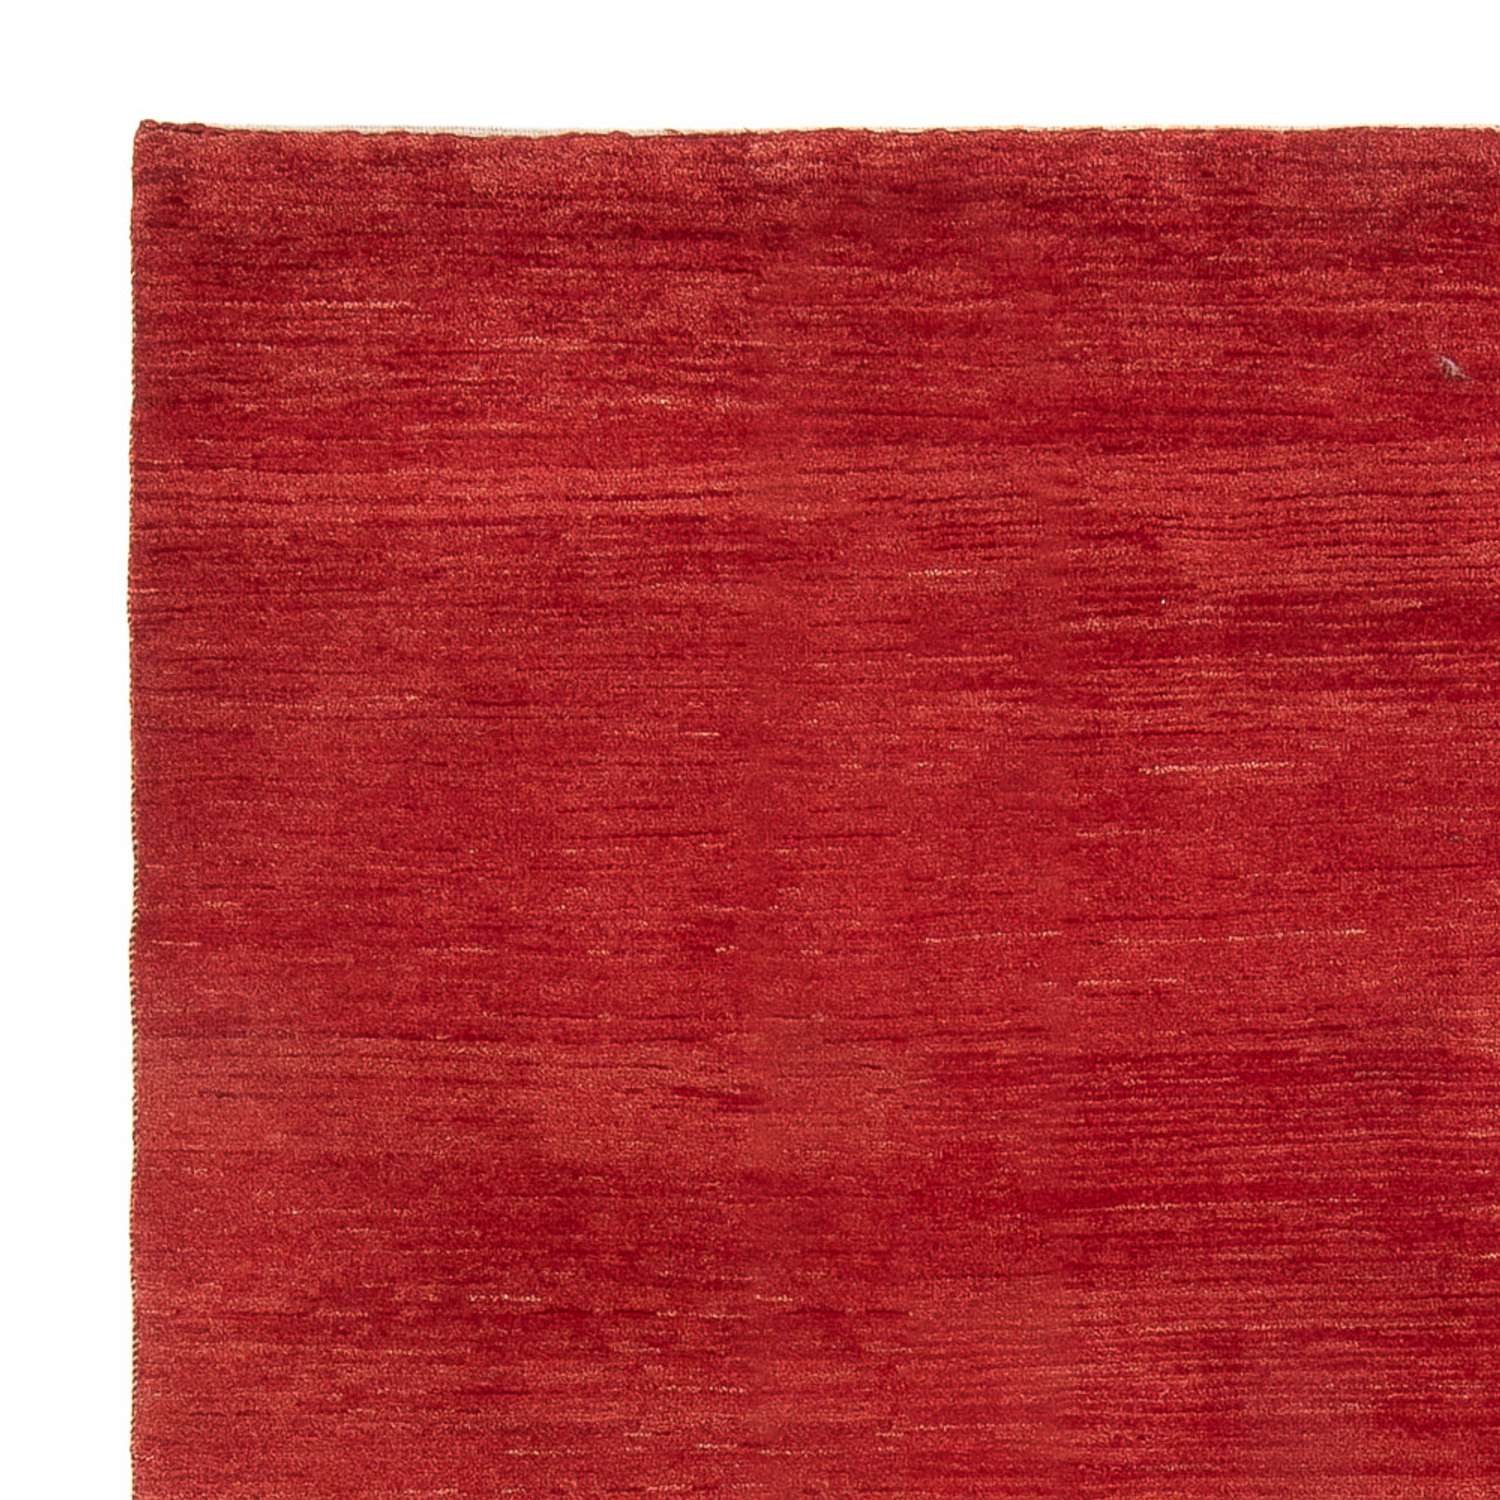 Gabbeh-teppe - persisk square  - 210 x 210 cm - rød